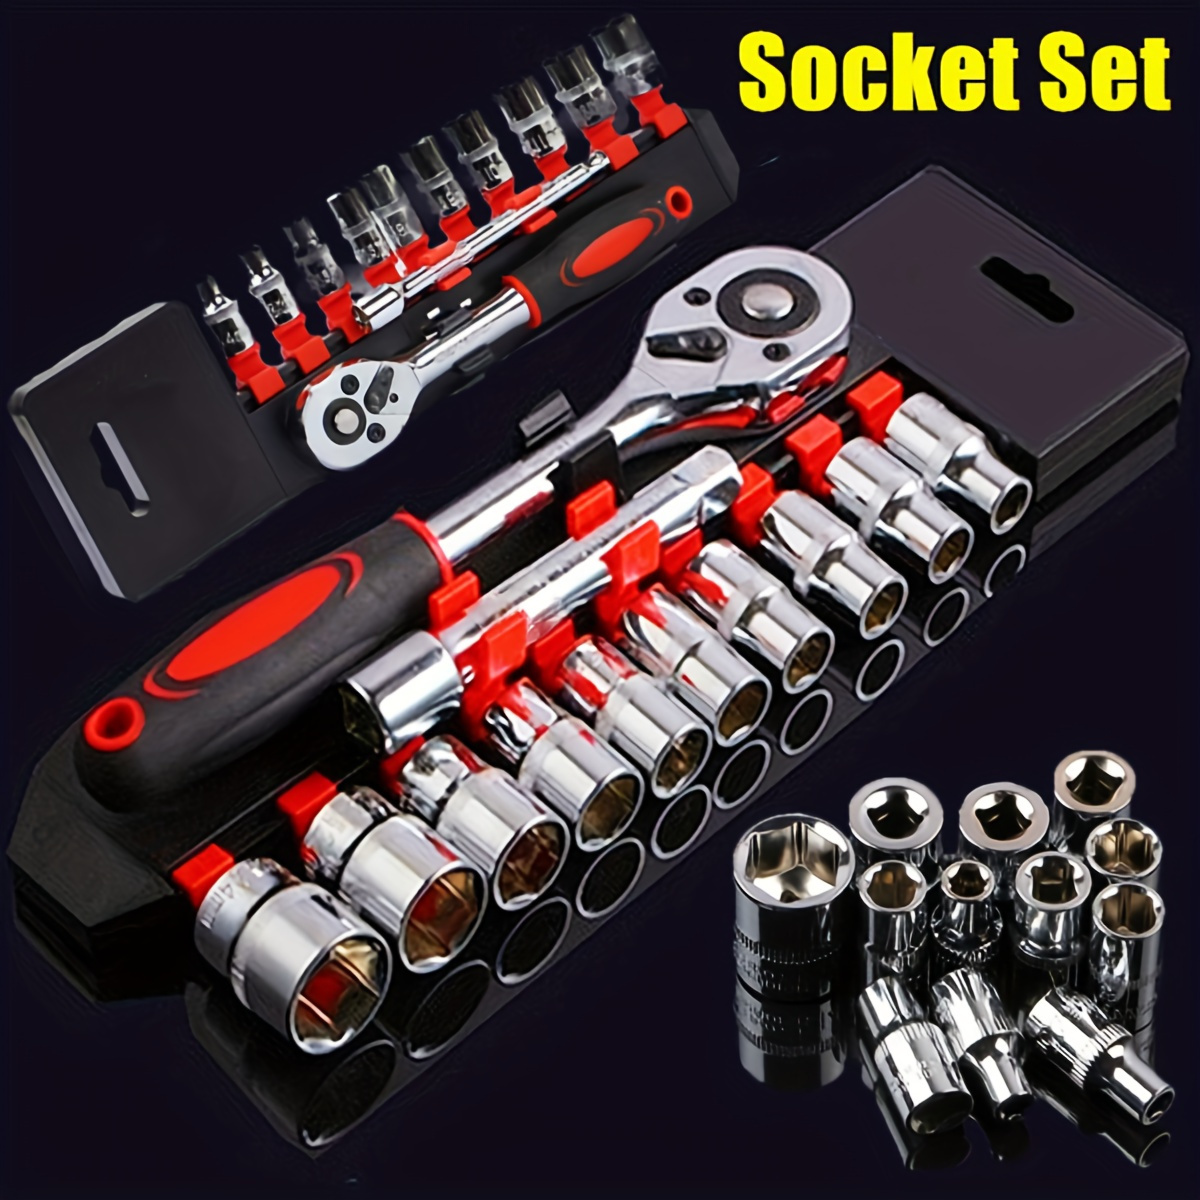 

1pc 1/4" Steel Socket Wrench Set - Multipurpose Repair Tool For Car, Boat, Motorcycle, Bicycle - Durable Hardware Upgrade